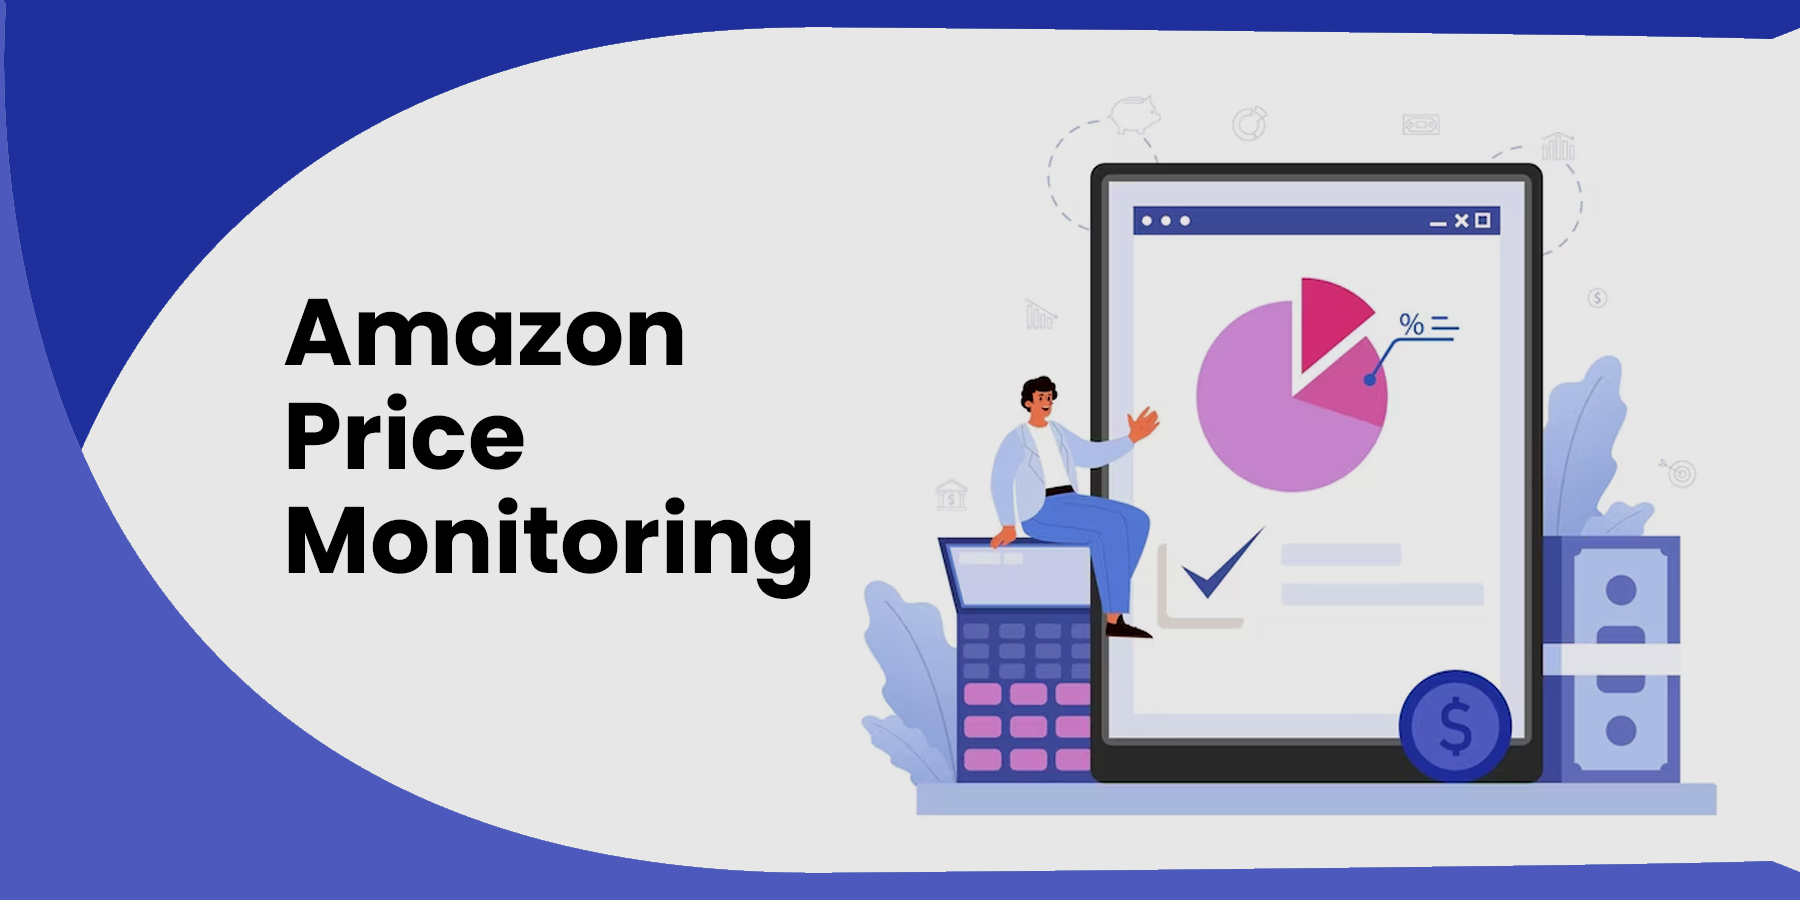 Amazon Price Monitoring